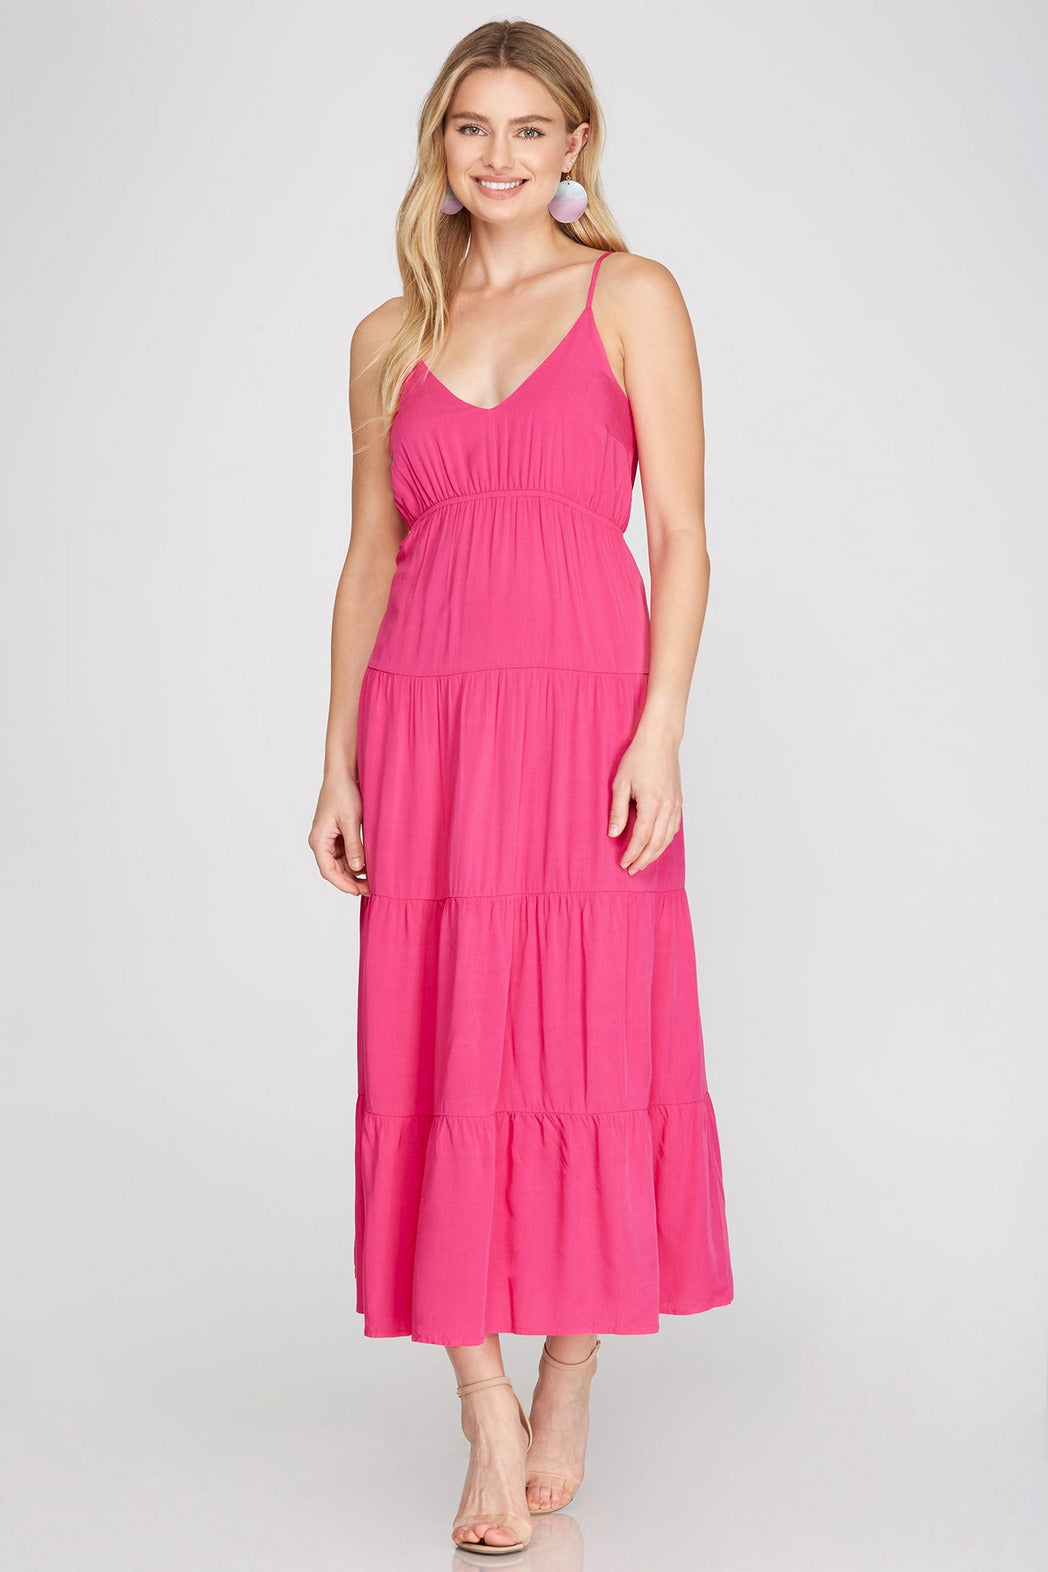 Leilani Hot Pink Tiered Maxi Dress